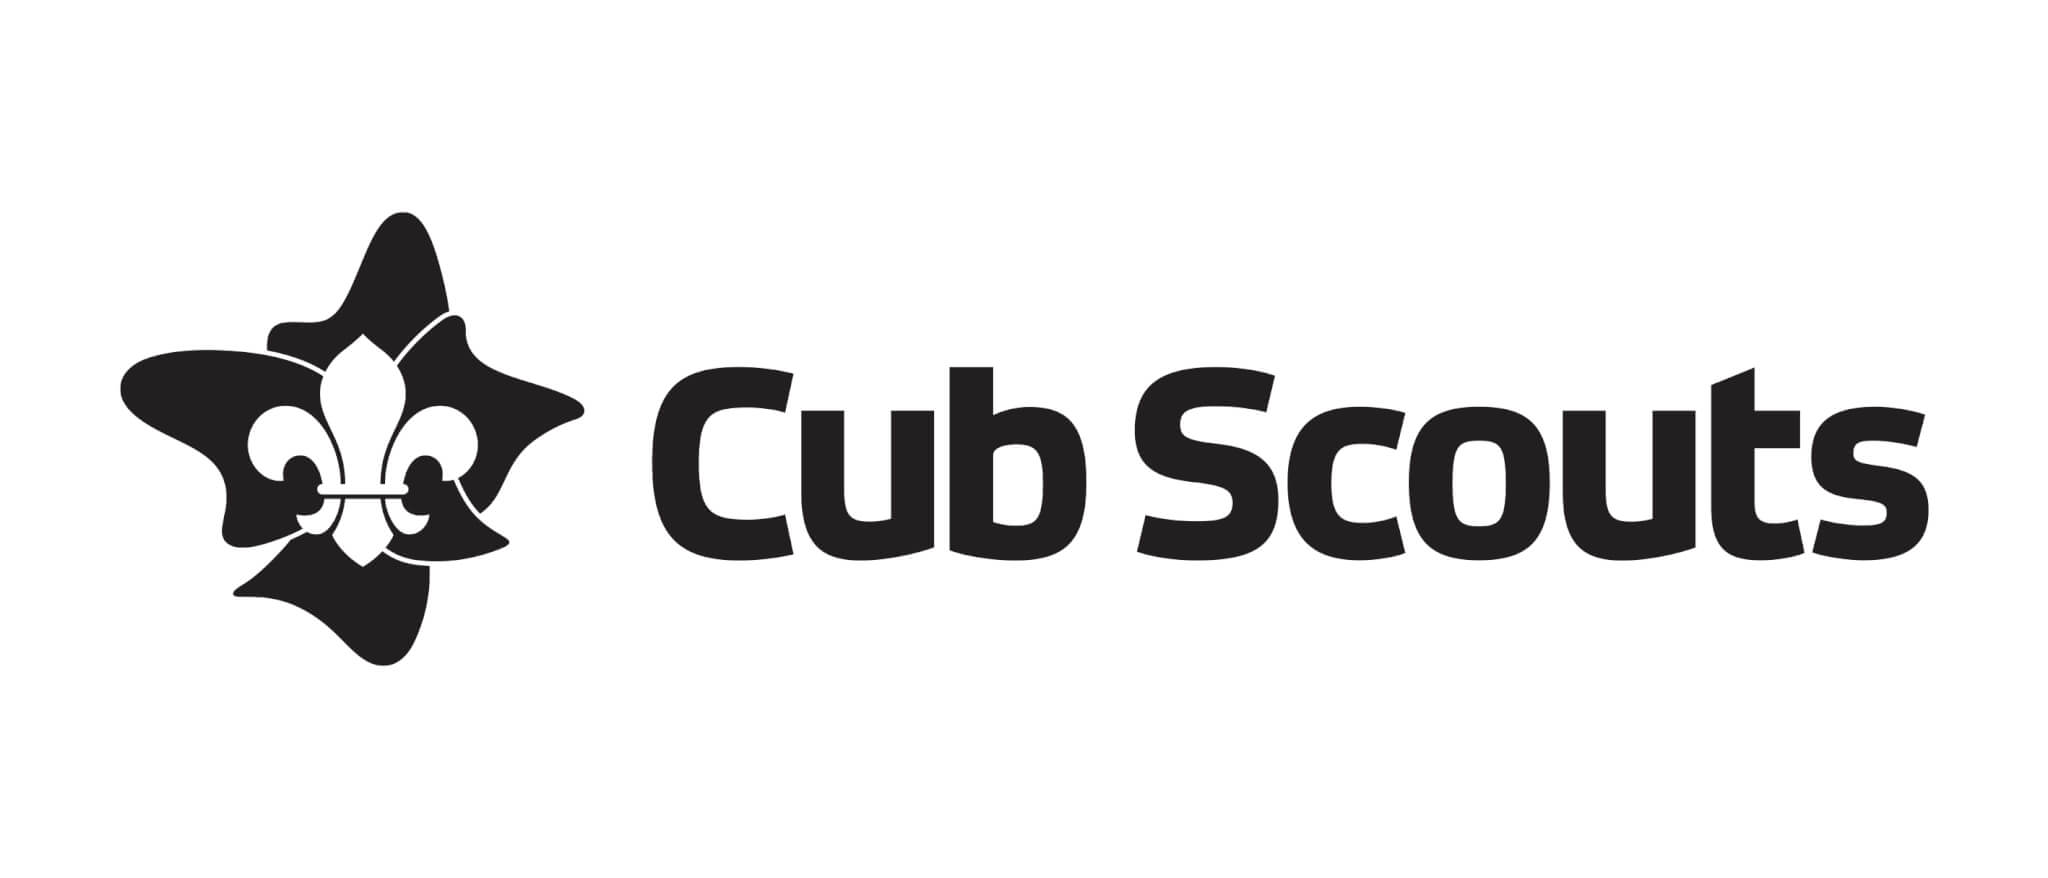 scouts australia logo